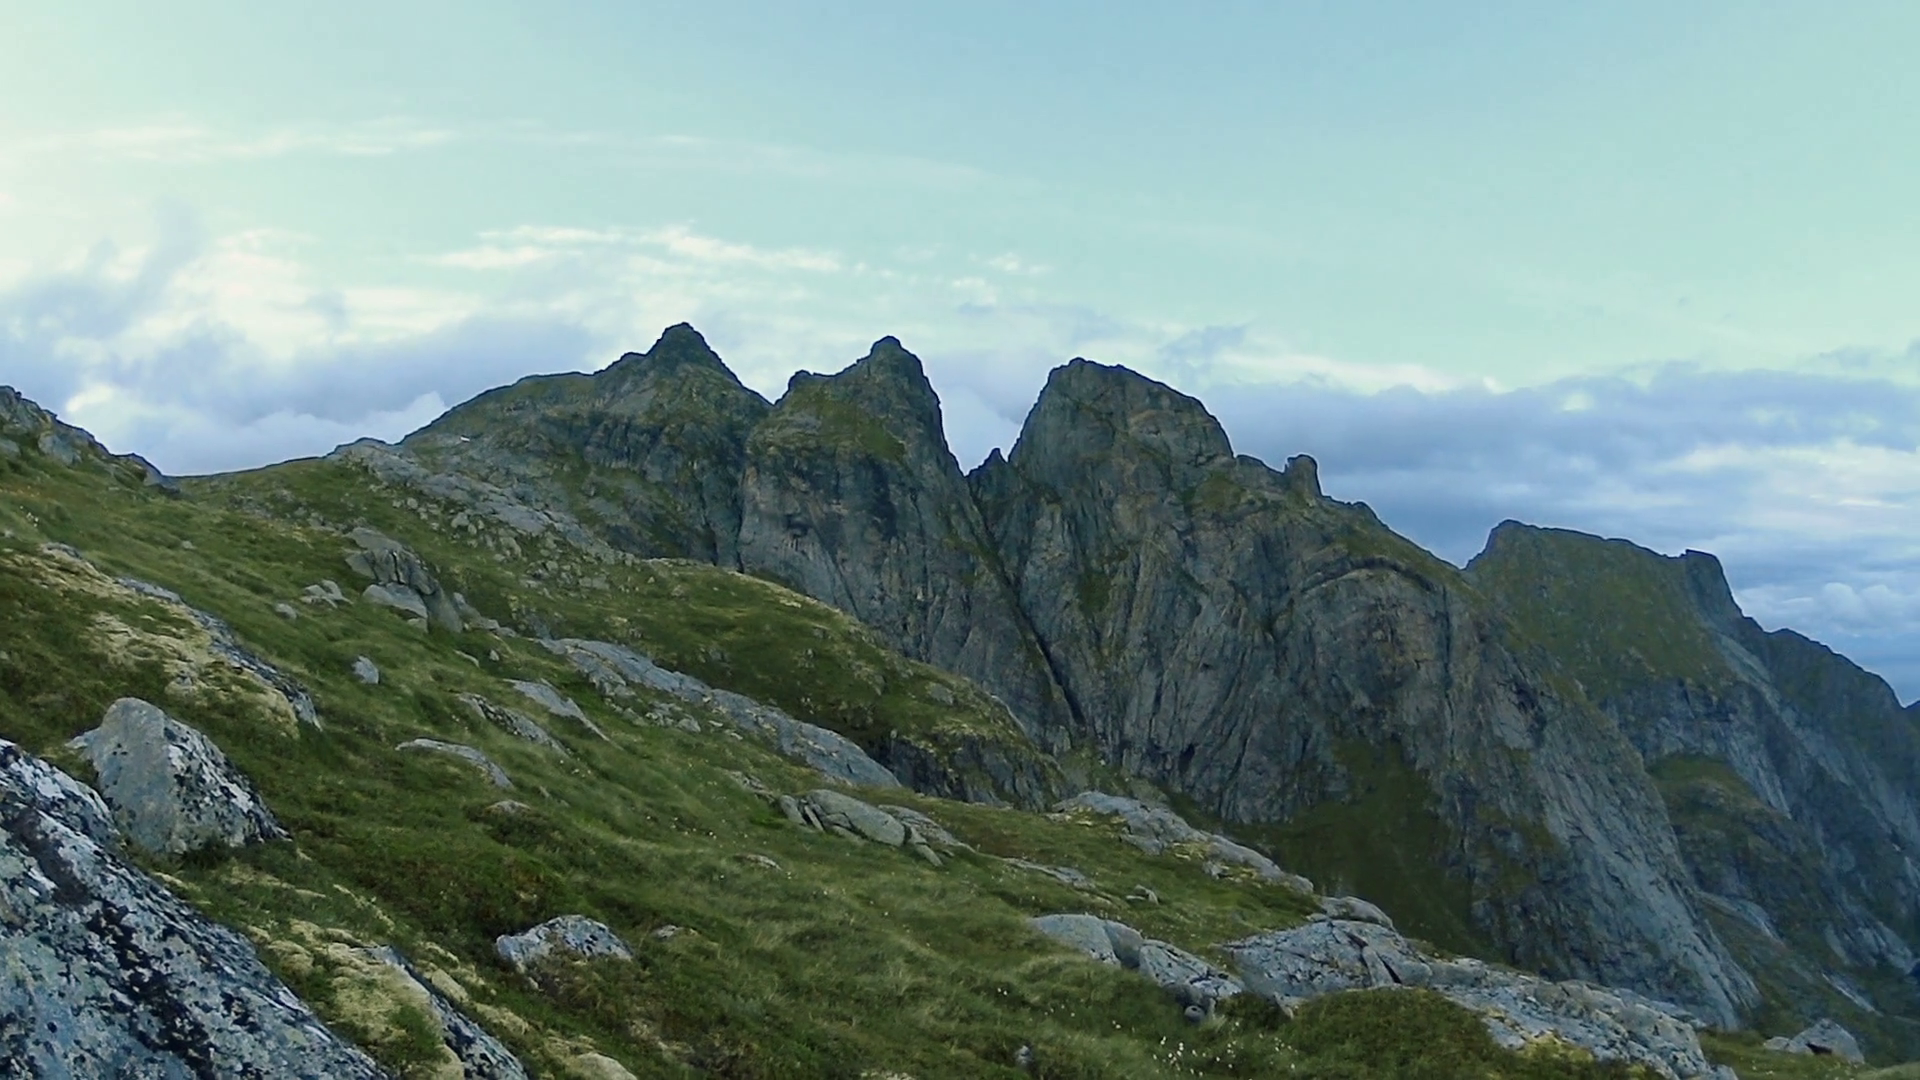 Lofoten islands,Norway. Hiking trip in mountains, steep cliff, peaks ...